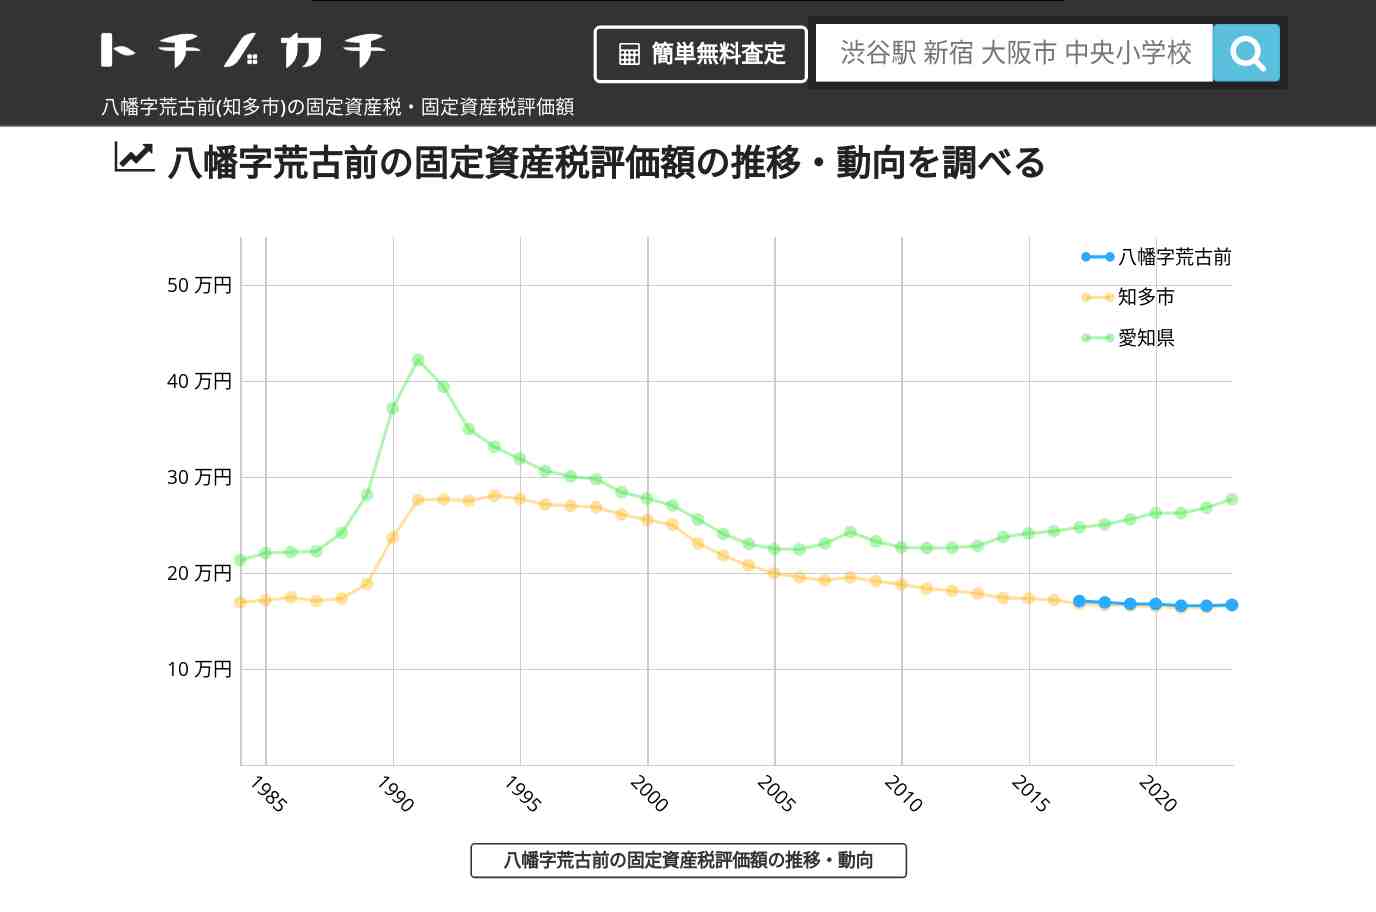 八幡字荒古前(知多市)の固定資産税・固定資産税評価額 | トチノカチ